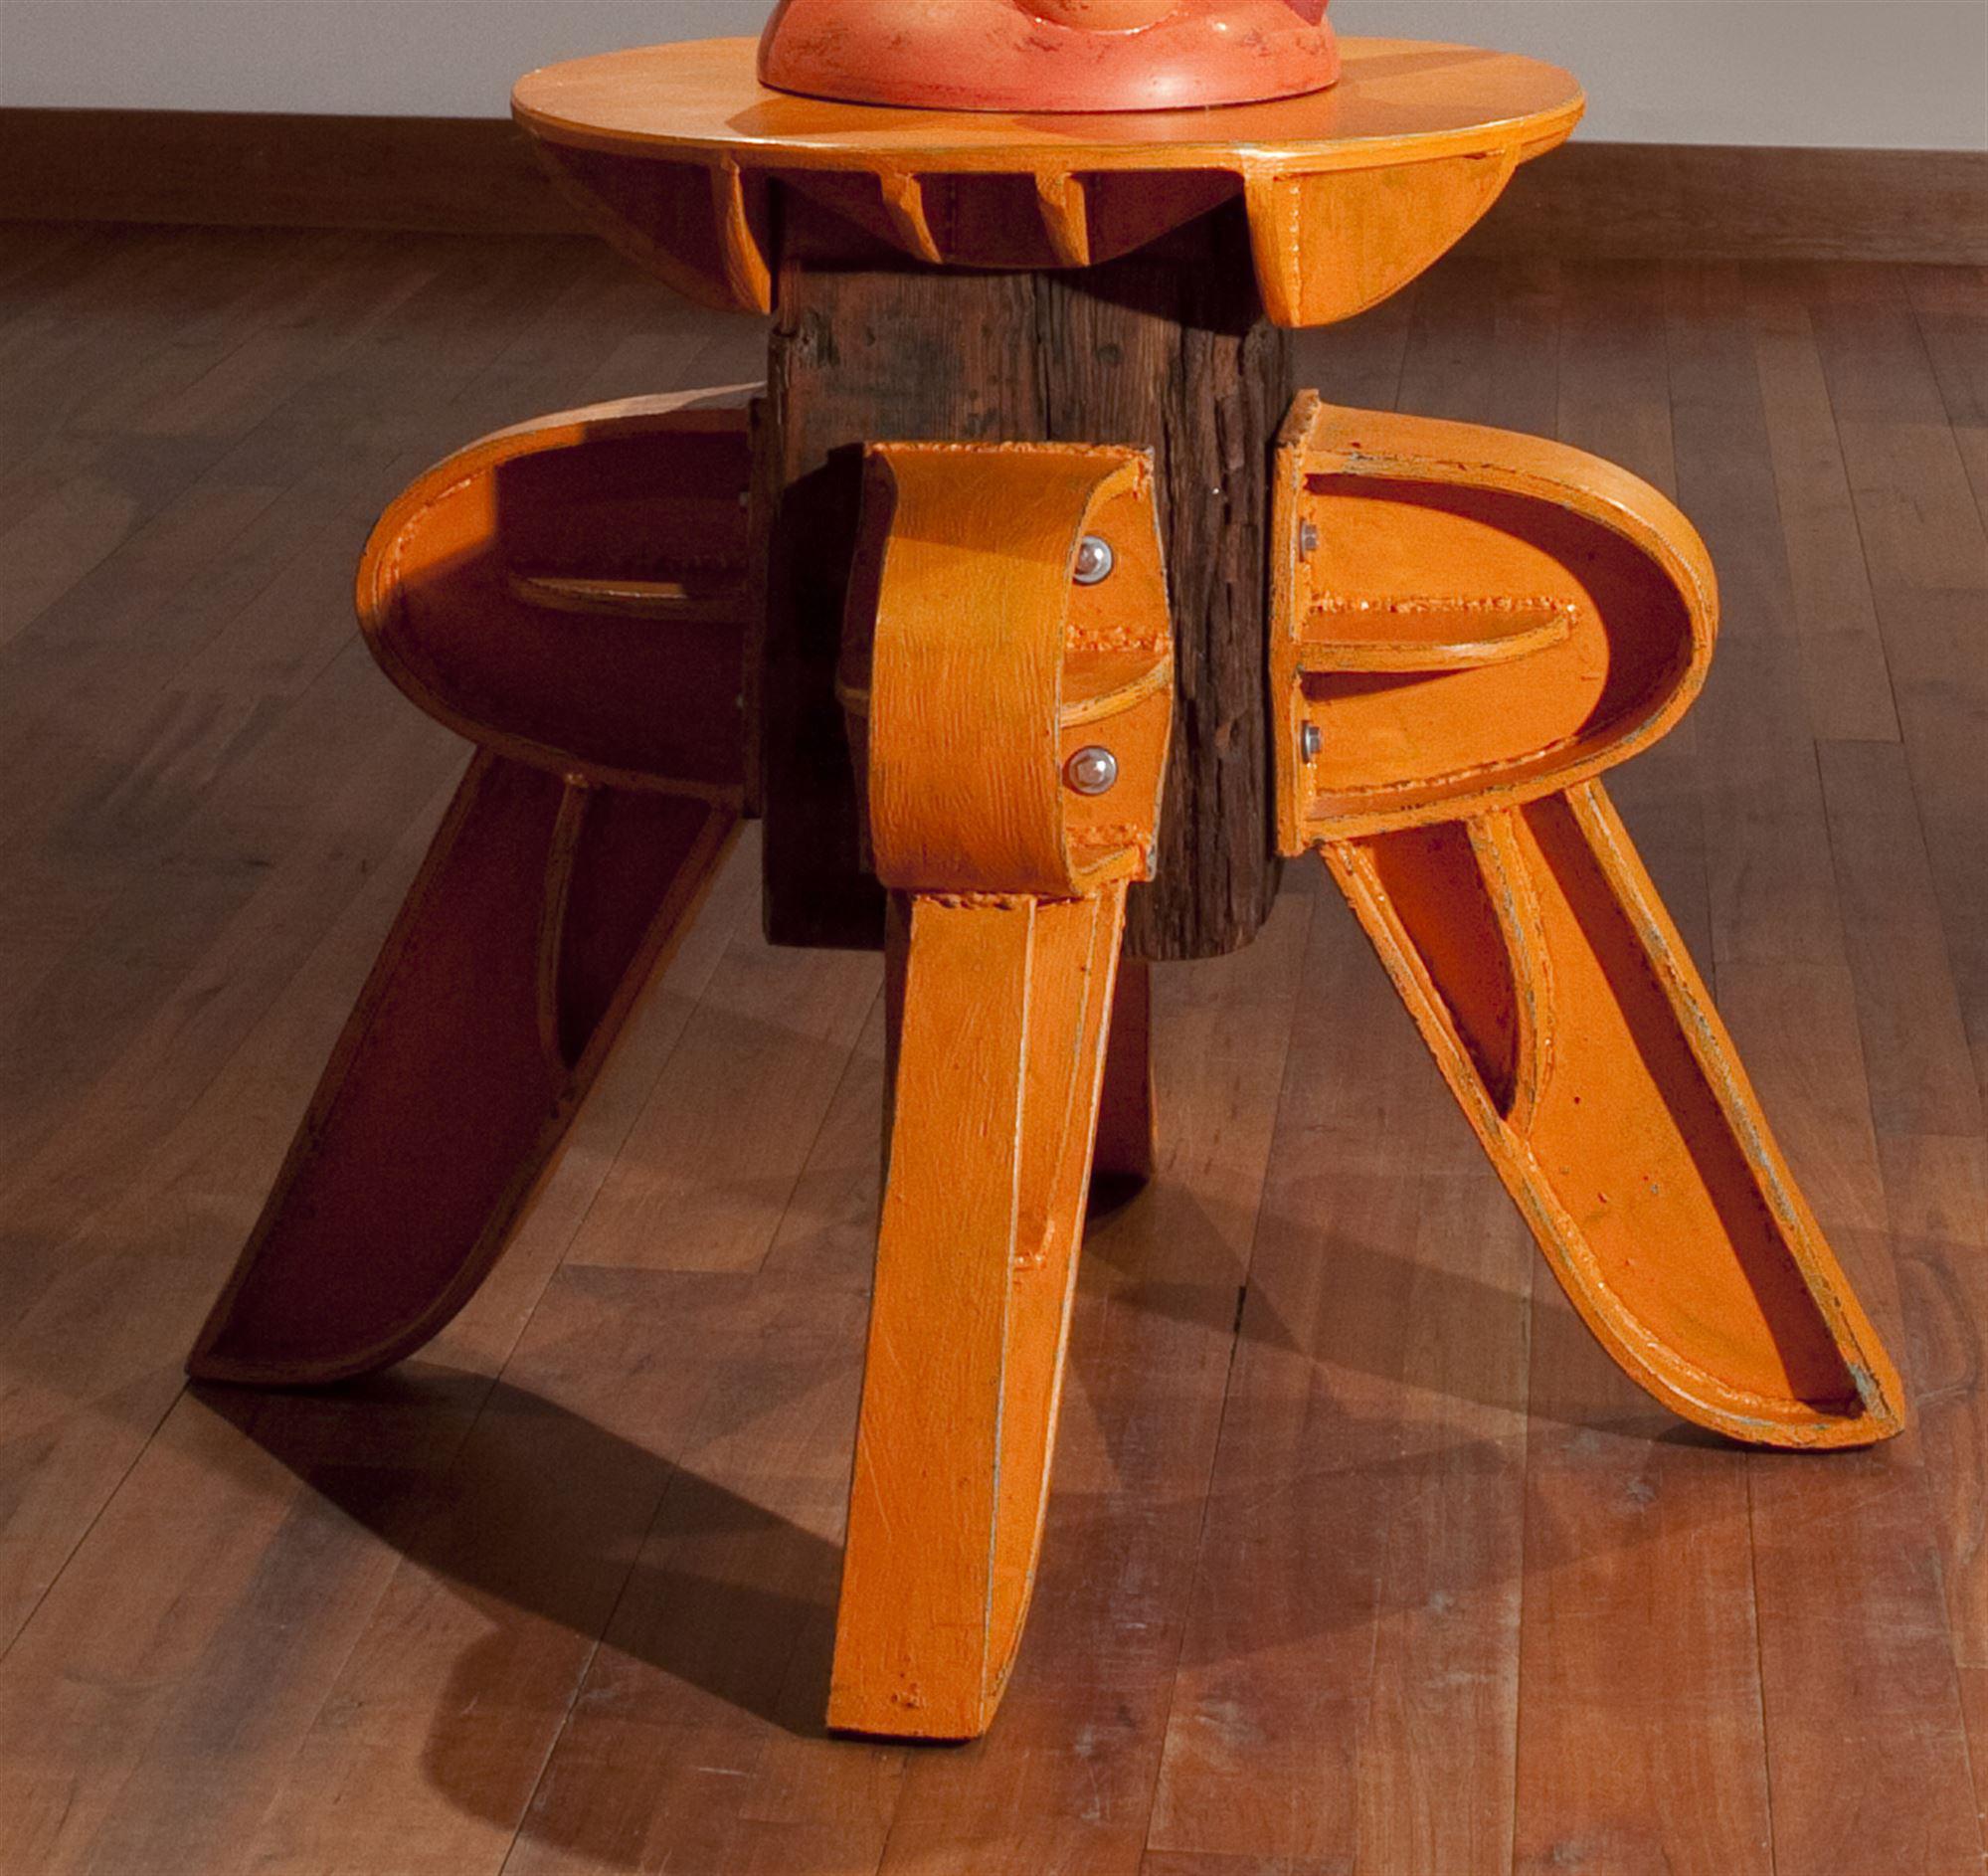 

											Doug Herren</b>

											<em>
												Selected Works</em> 

											<h4>
												Santa Fe: December 30 - March 18, 2023											</h4>

		                																																Doug Herren,  
																																								<i>Orange Stand,</i>  
																																								2012, 
																																								ceramic, casein paint, 
																																								30 x 28 x 28 inches 
																								
		                				